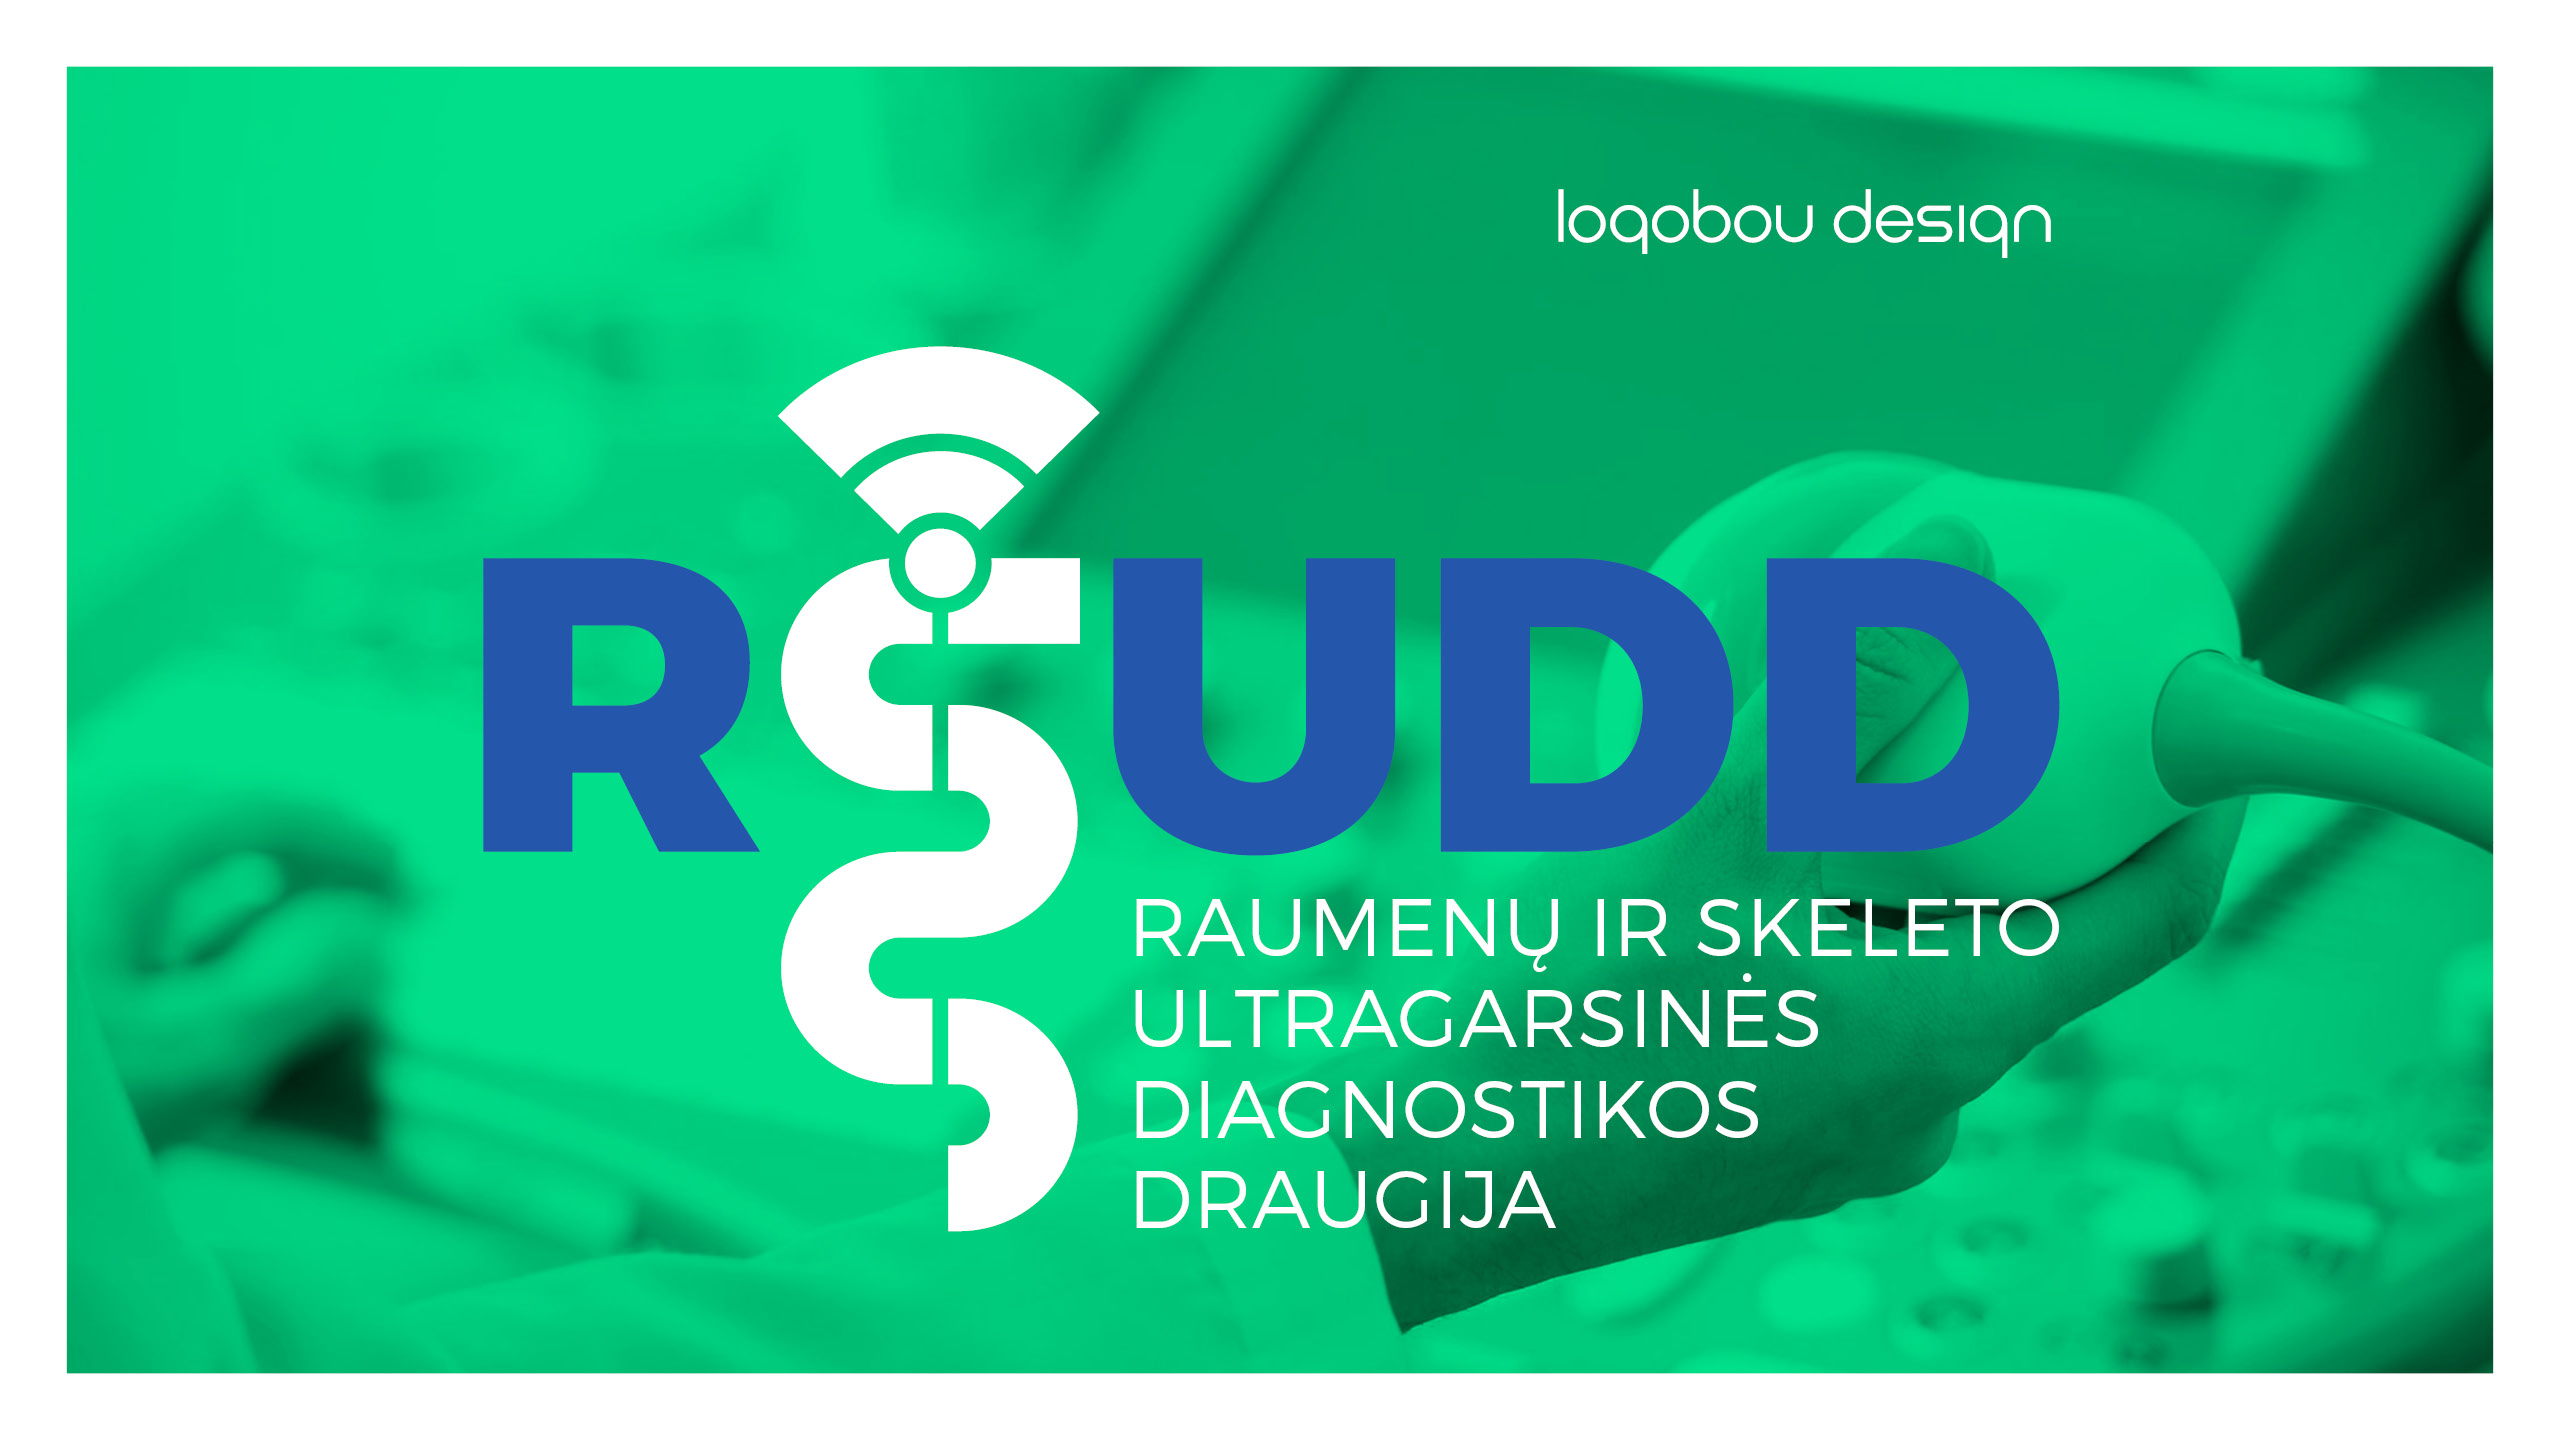 RSUDD Brandbook - Logobou Design 9